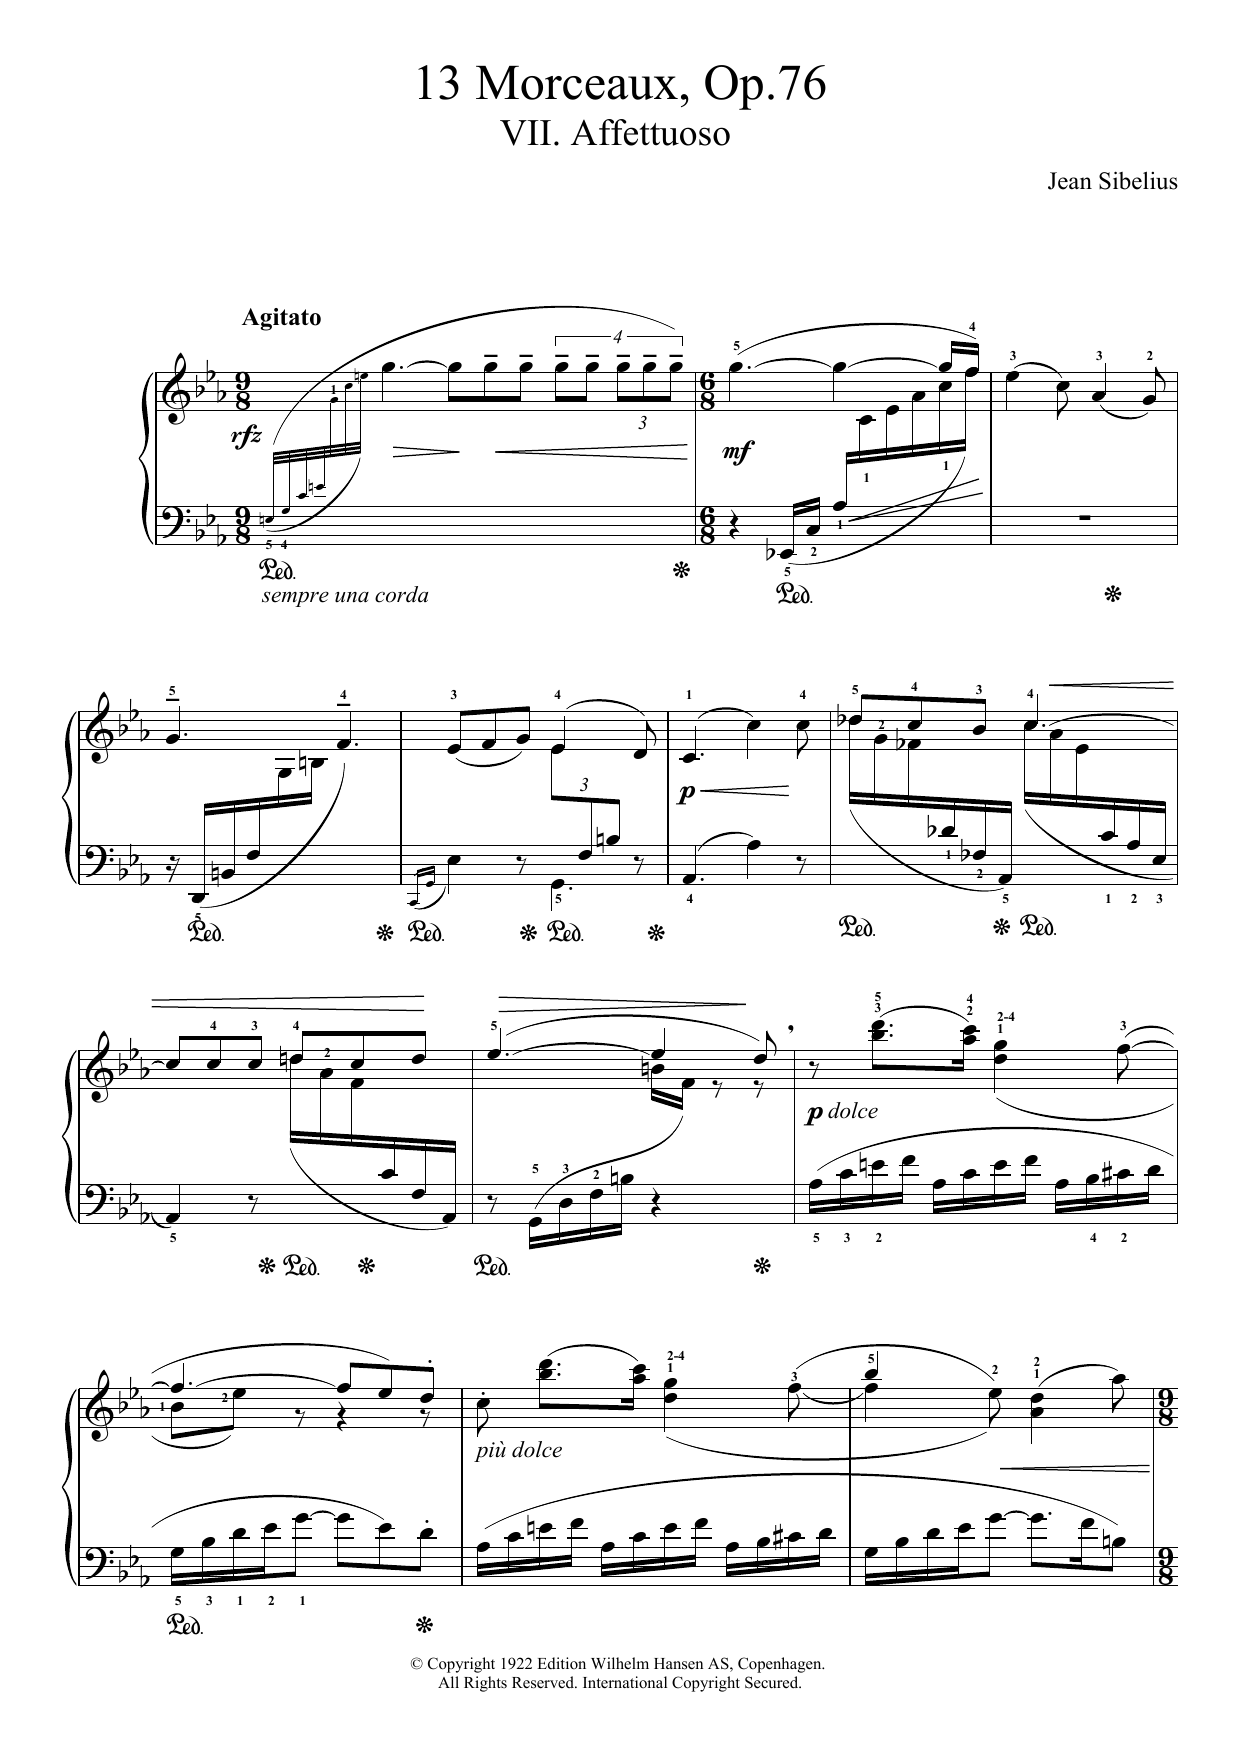 Download Jean Sibelius 13 Morceaux, Op.76 - VII. Affettuoso Sheet Music